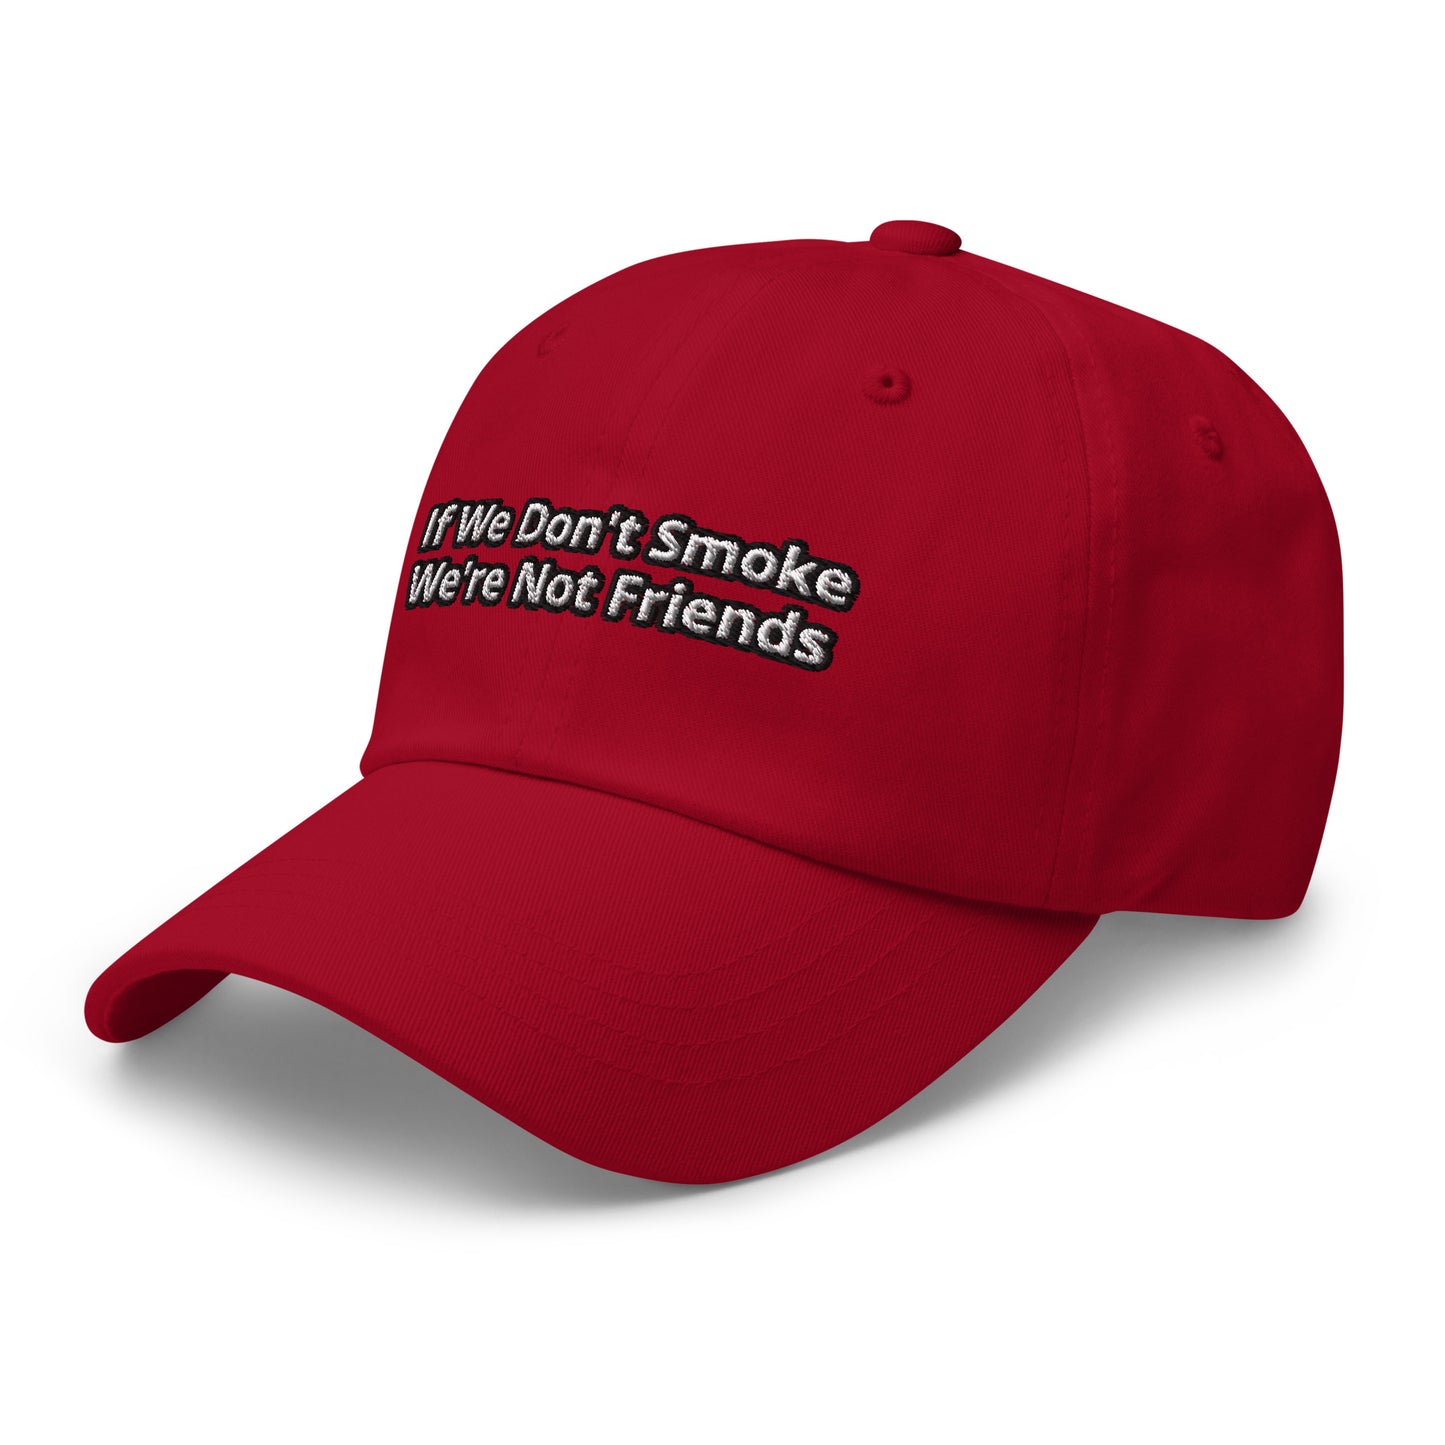 Not Friends Dad hat